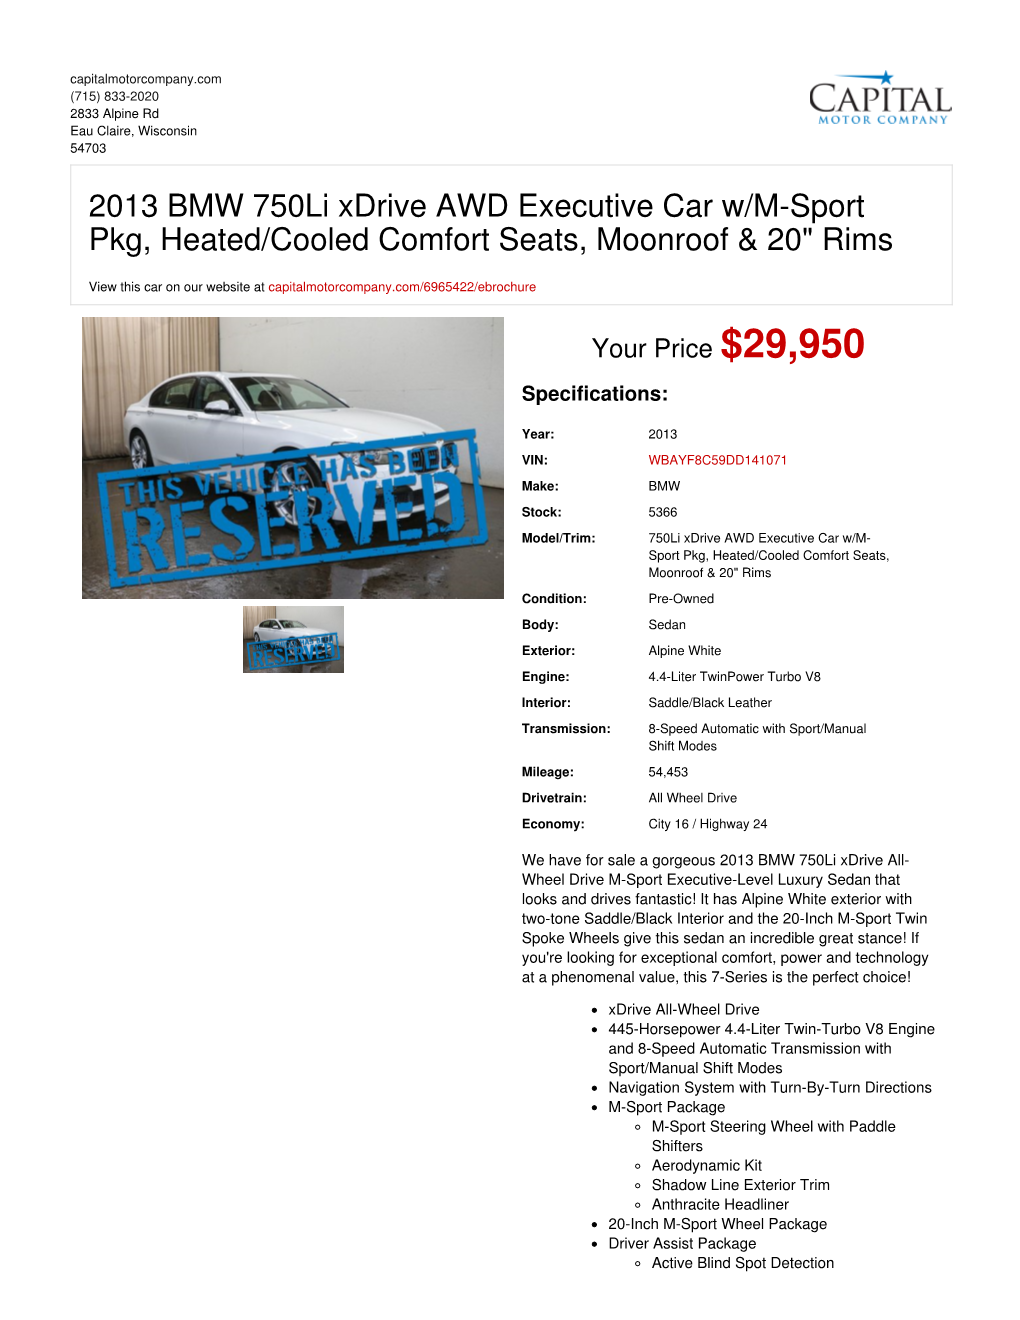 2013 BMW 750Li Xdrive AWD Executive Car W/M-Sport Pkg, Heated/Cooled Comfort Seats, Moonroof & 20" Rims